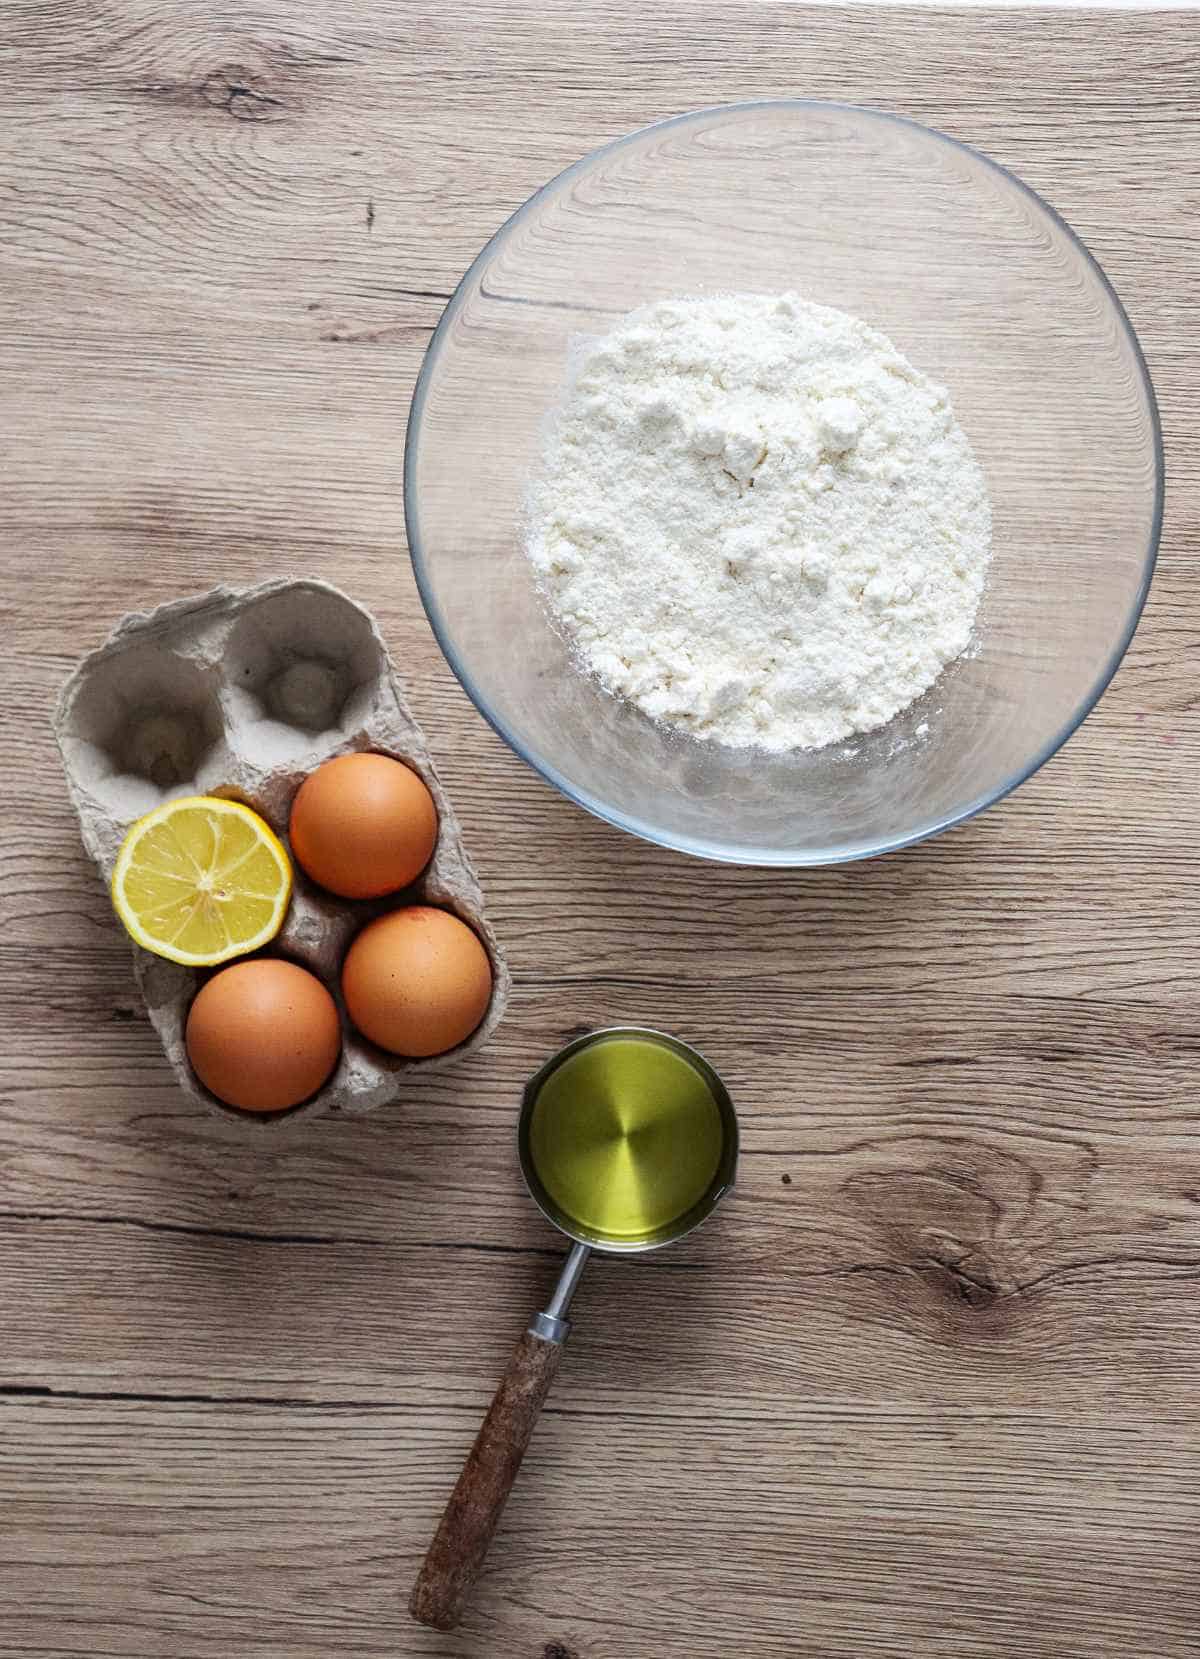 dry ingredients for lemon loaf cake in a bowl.